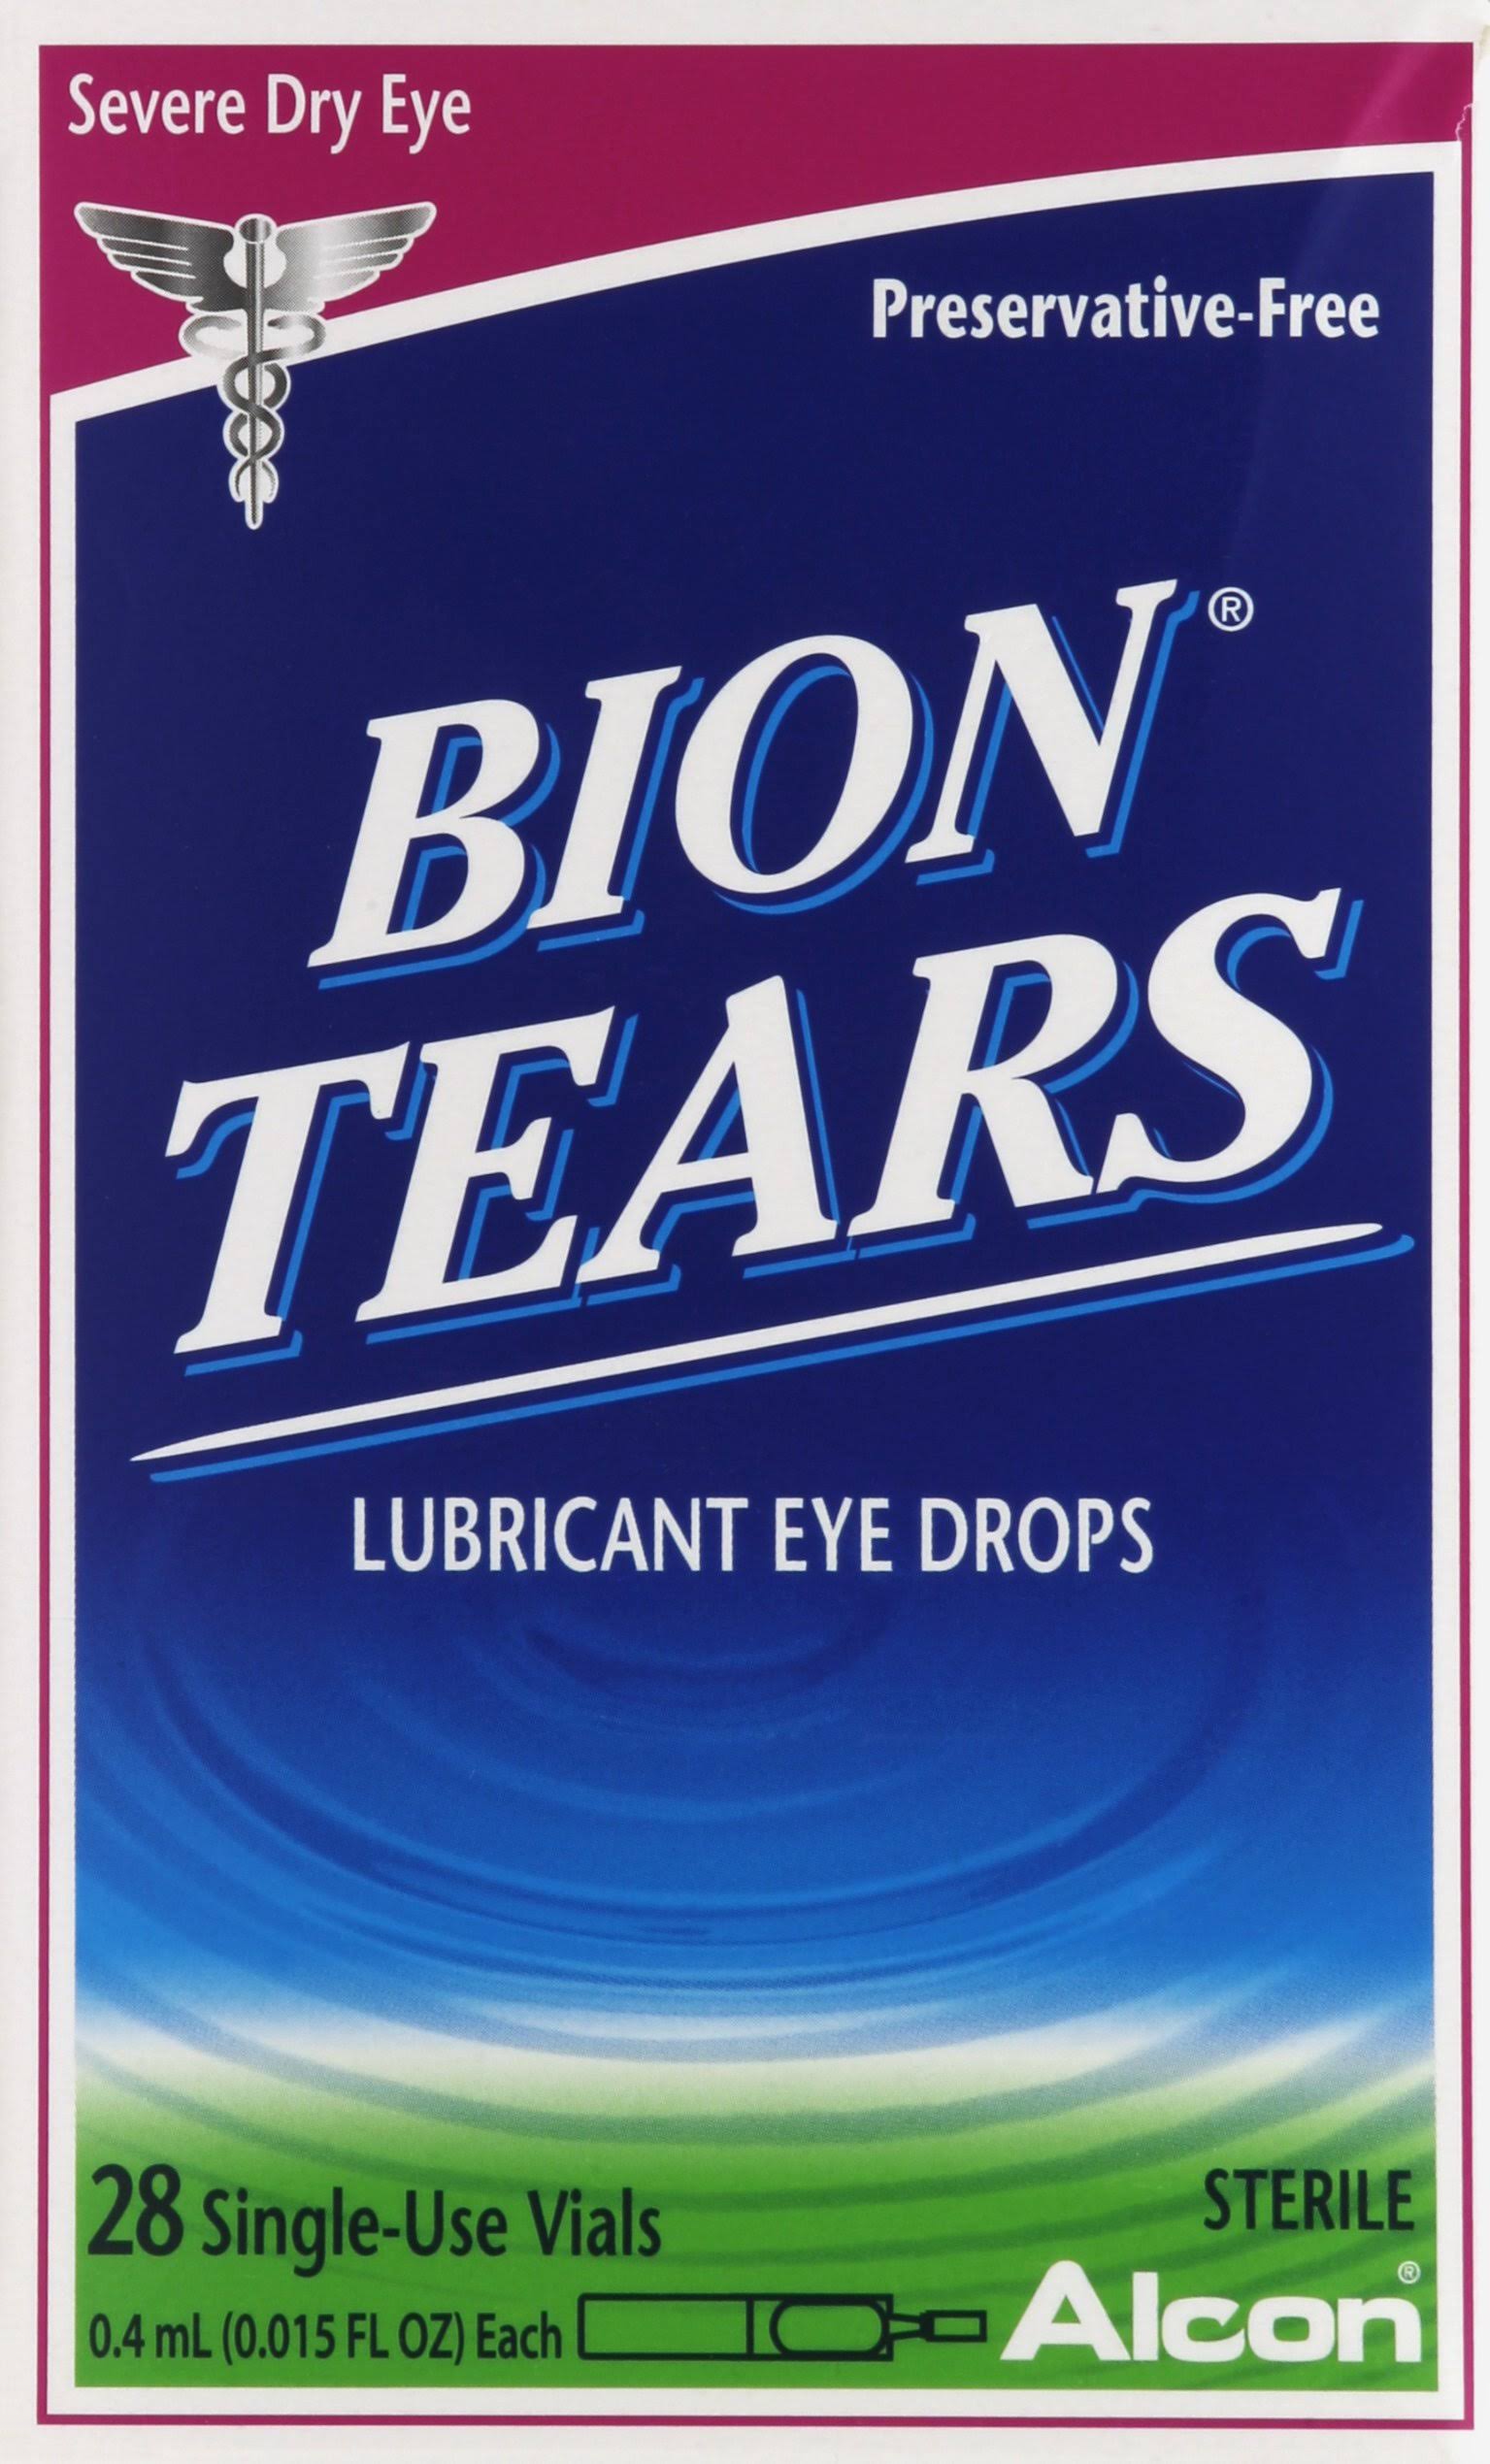 Alcon Bion Tears Lubricant Eye Drops - 28 vials